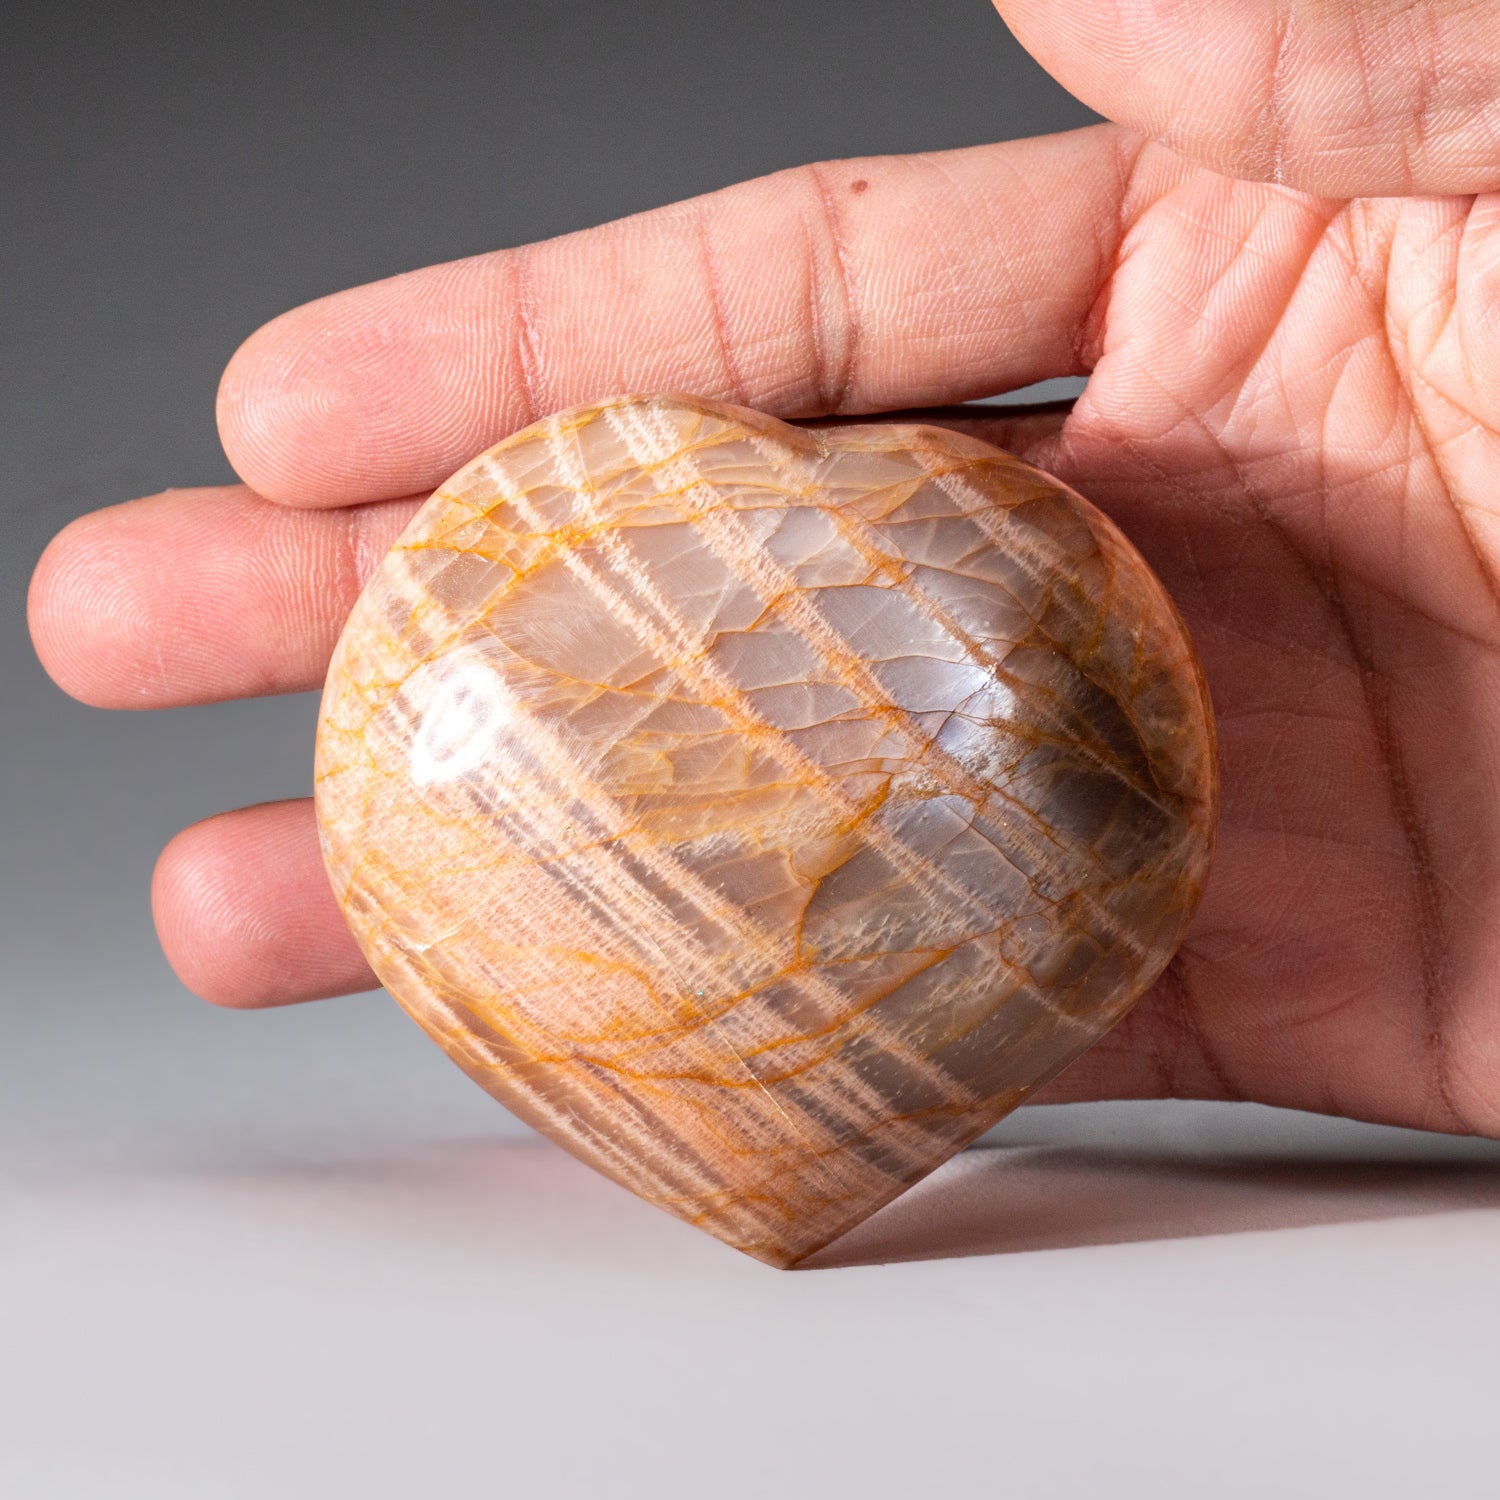 Genuine Polished Peach Moonstone (Medium) Heart from Madagascar